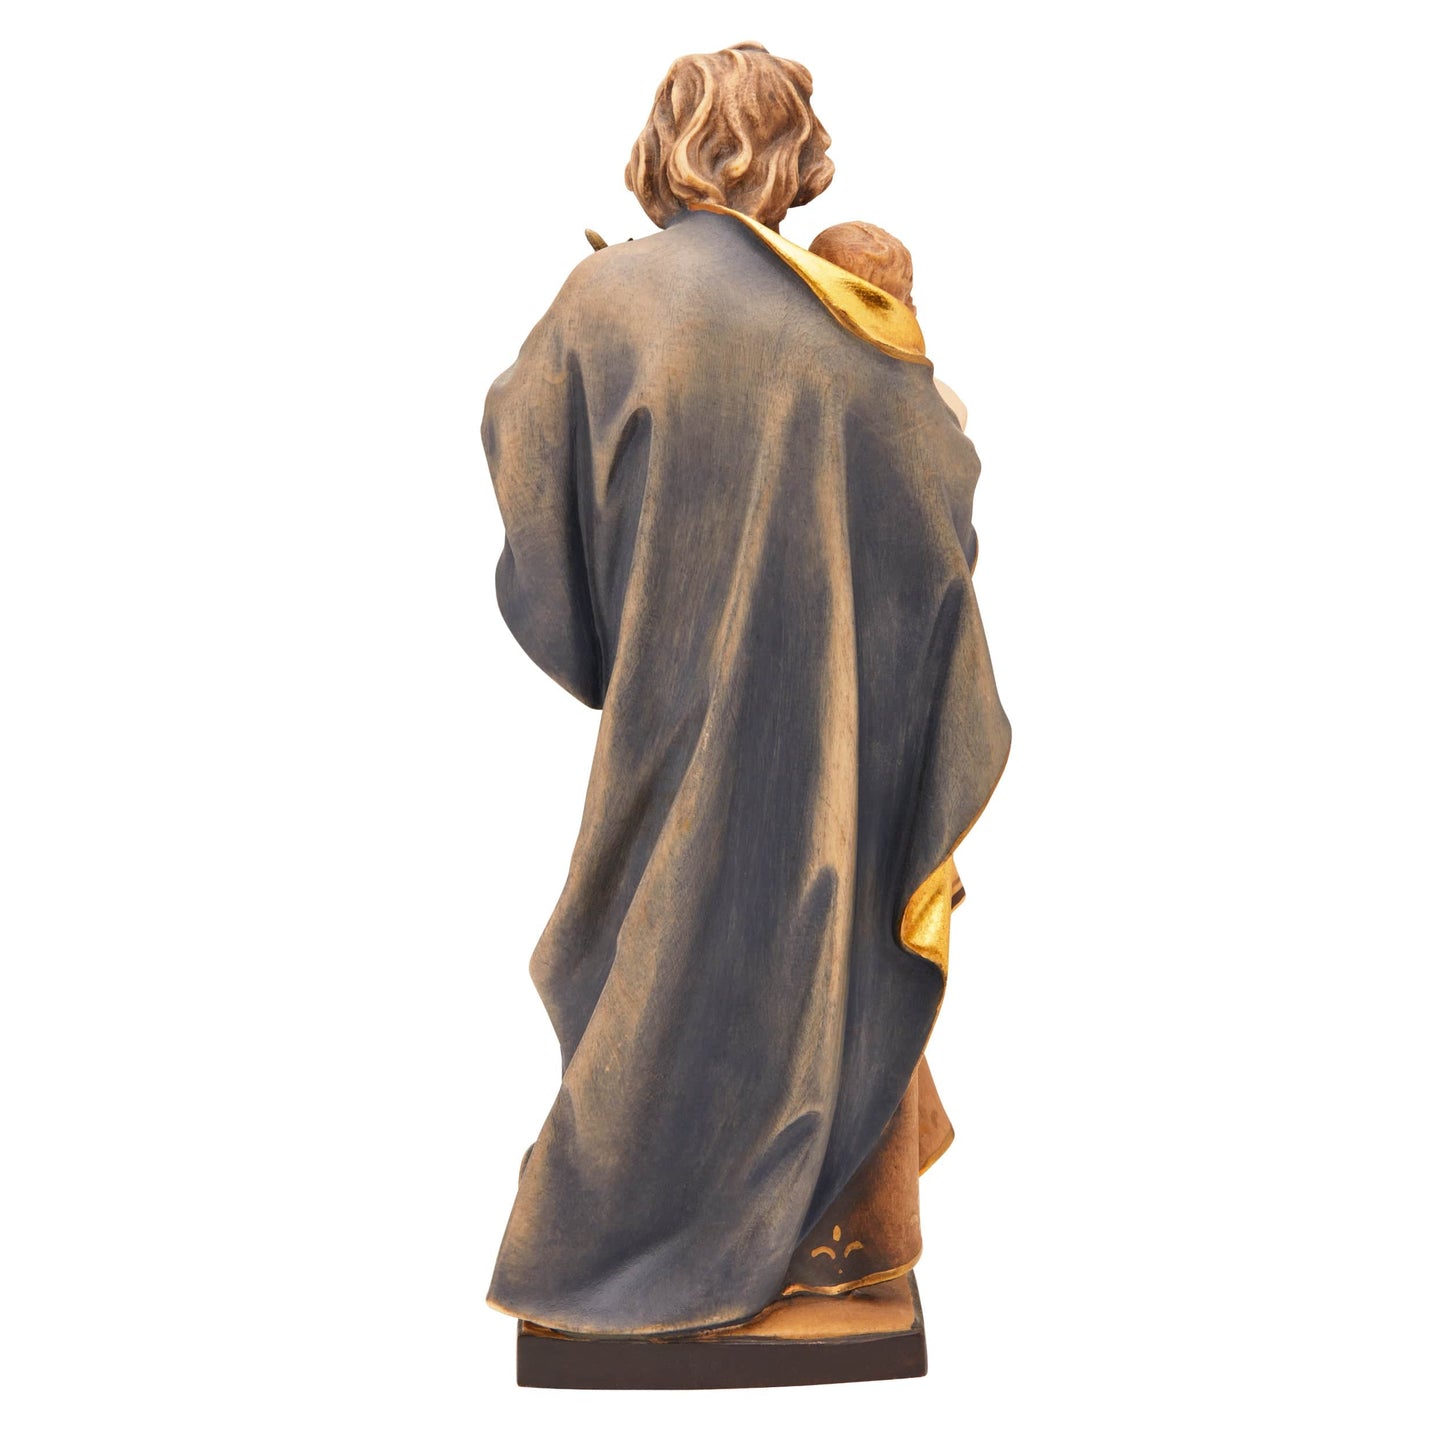 MONDO CATTOLICO 20 cm (7.87 in) Wooden Statue of St. Joseph Holding Baby Jesus